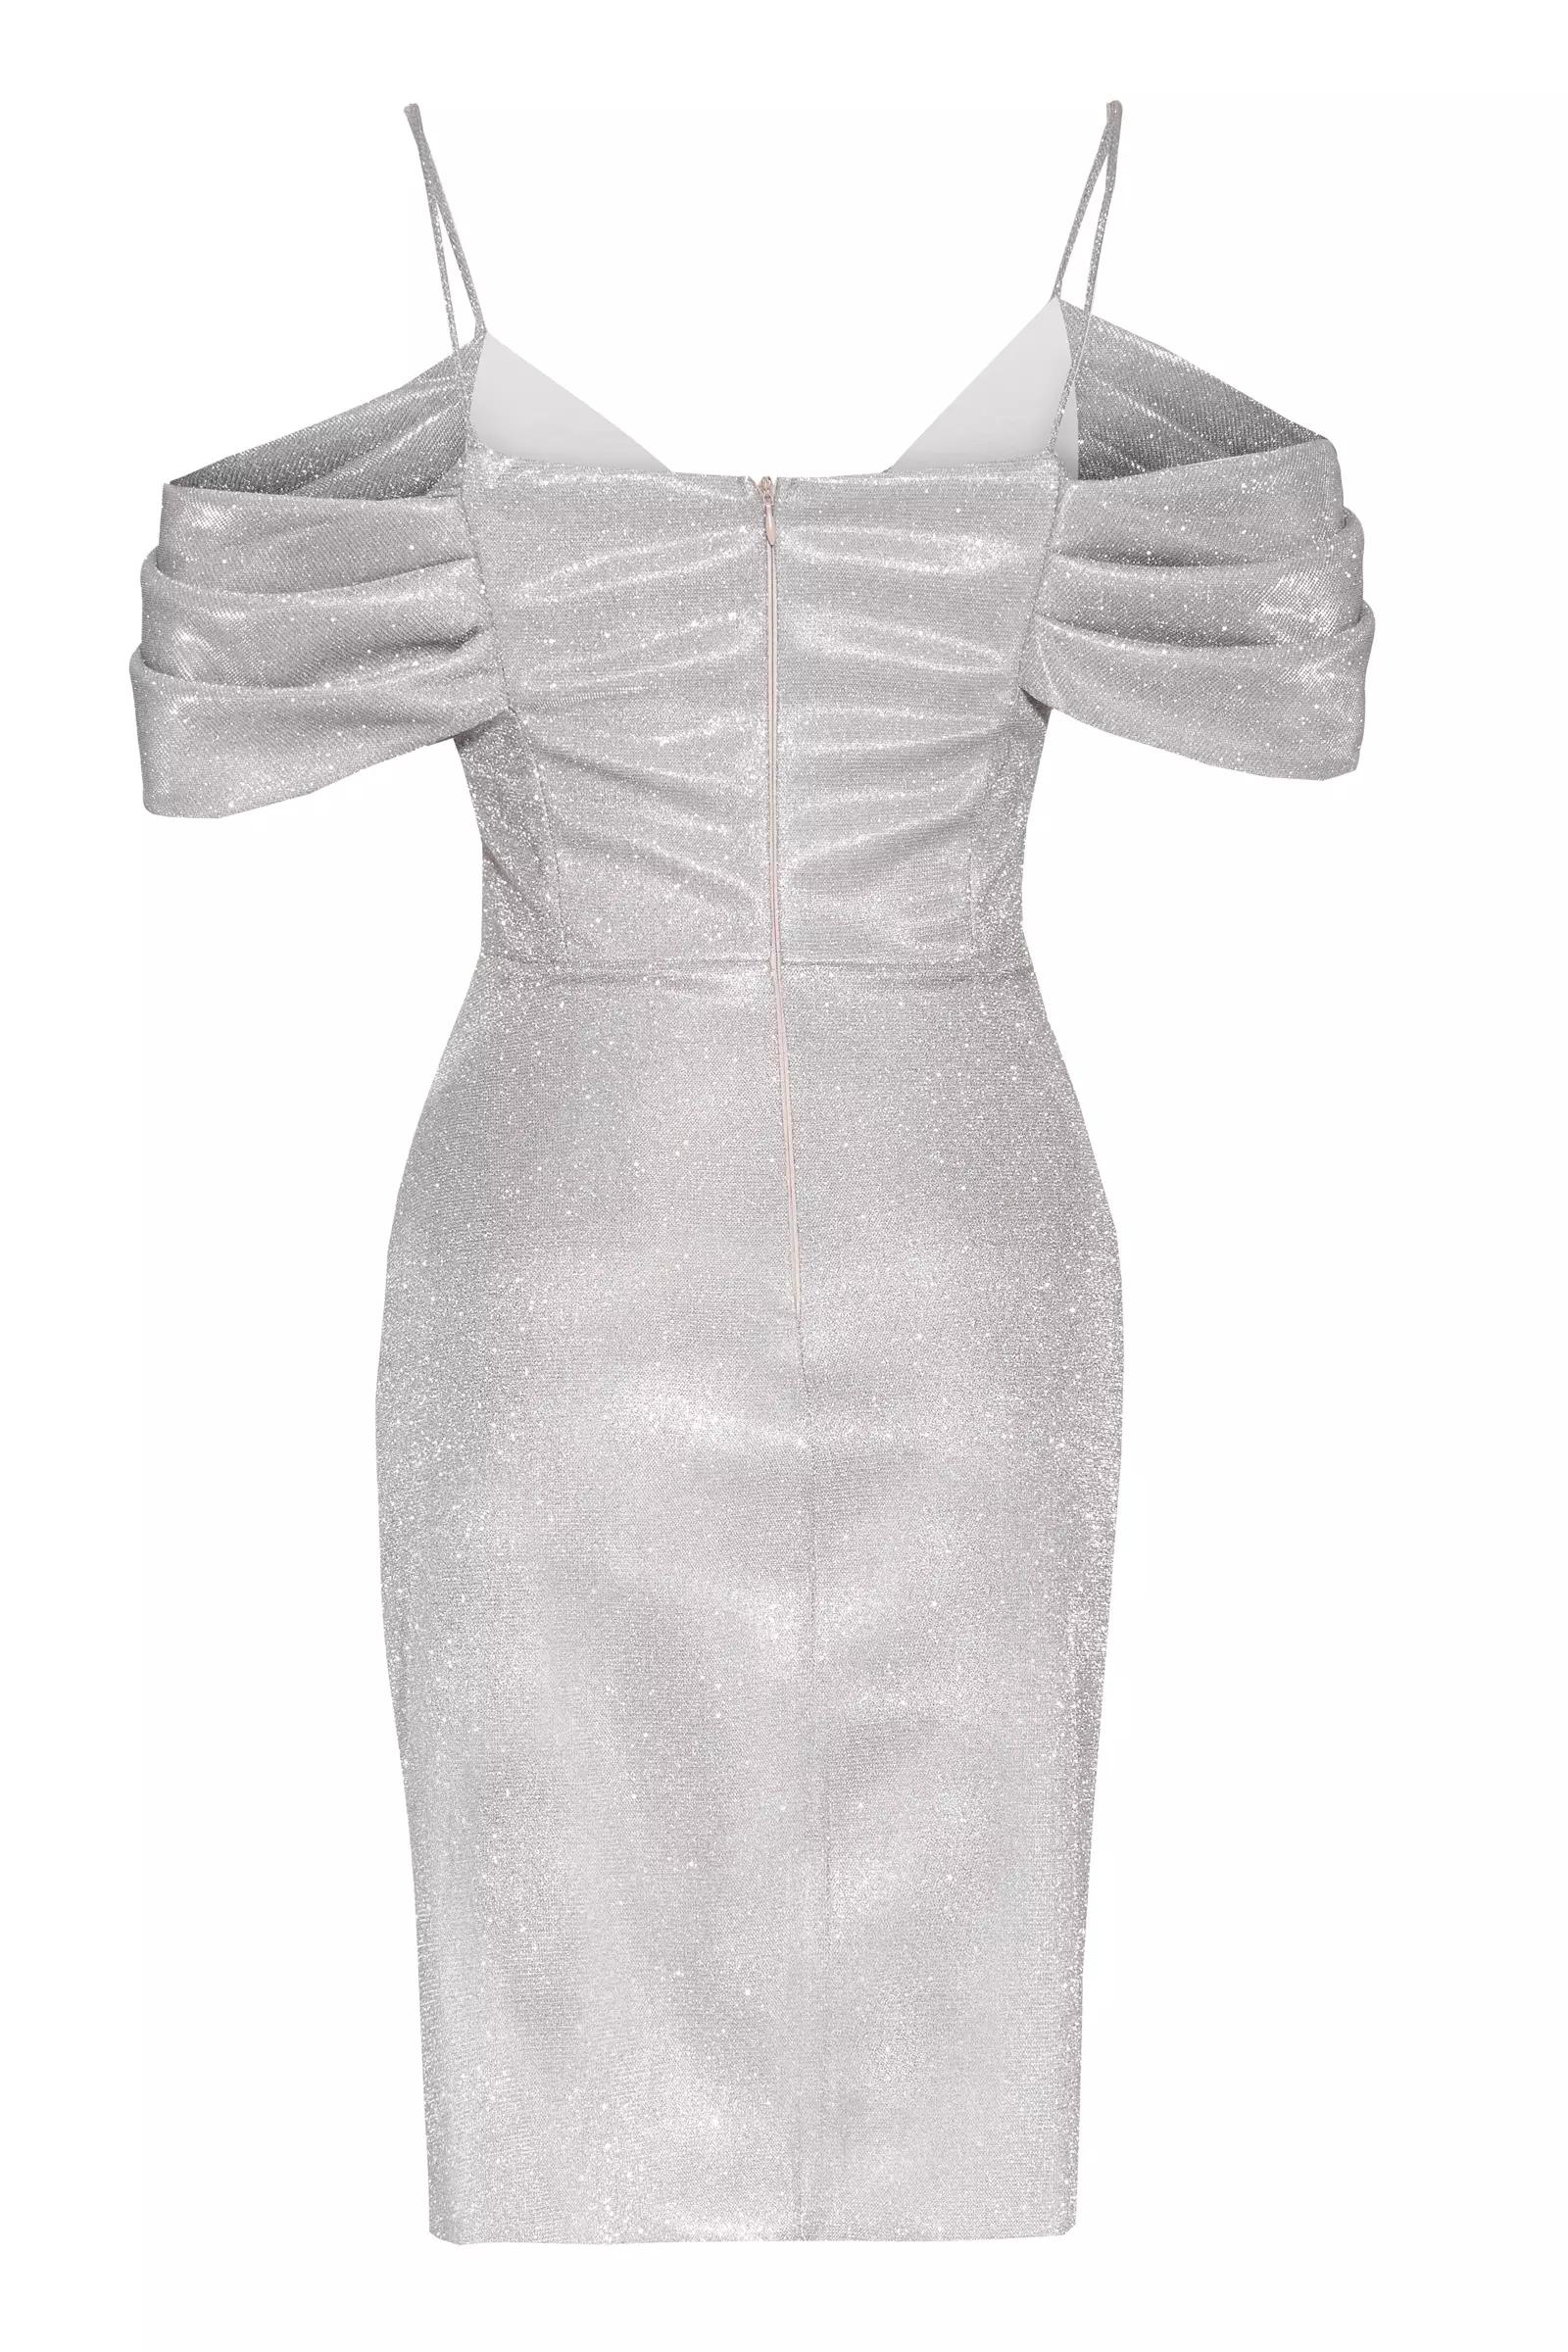 Silver glare sleeveless mini dress